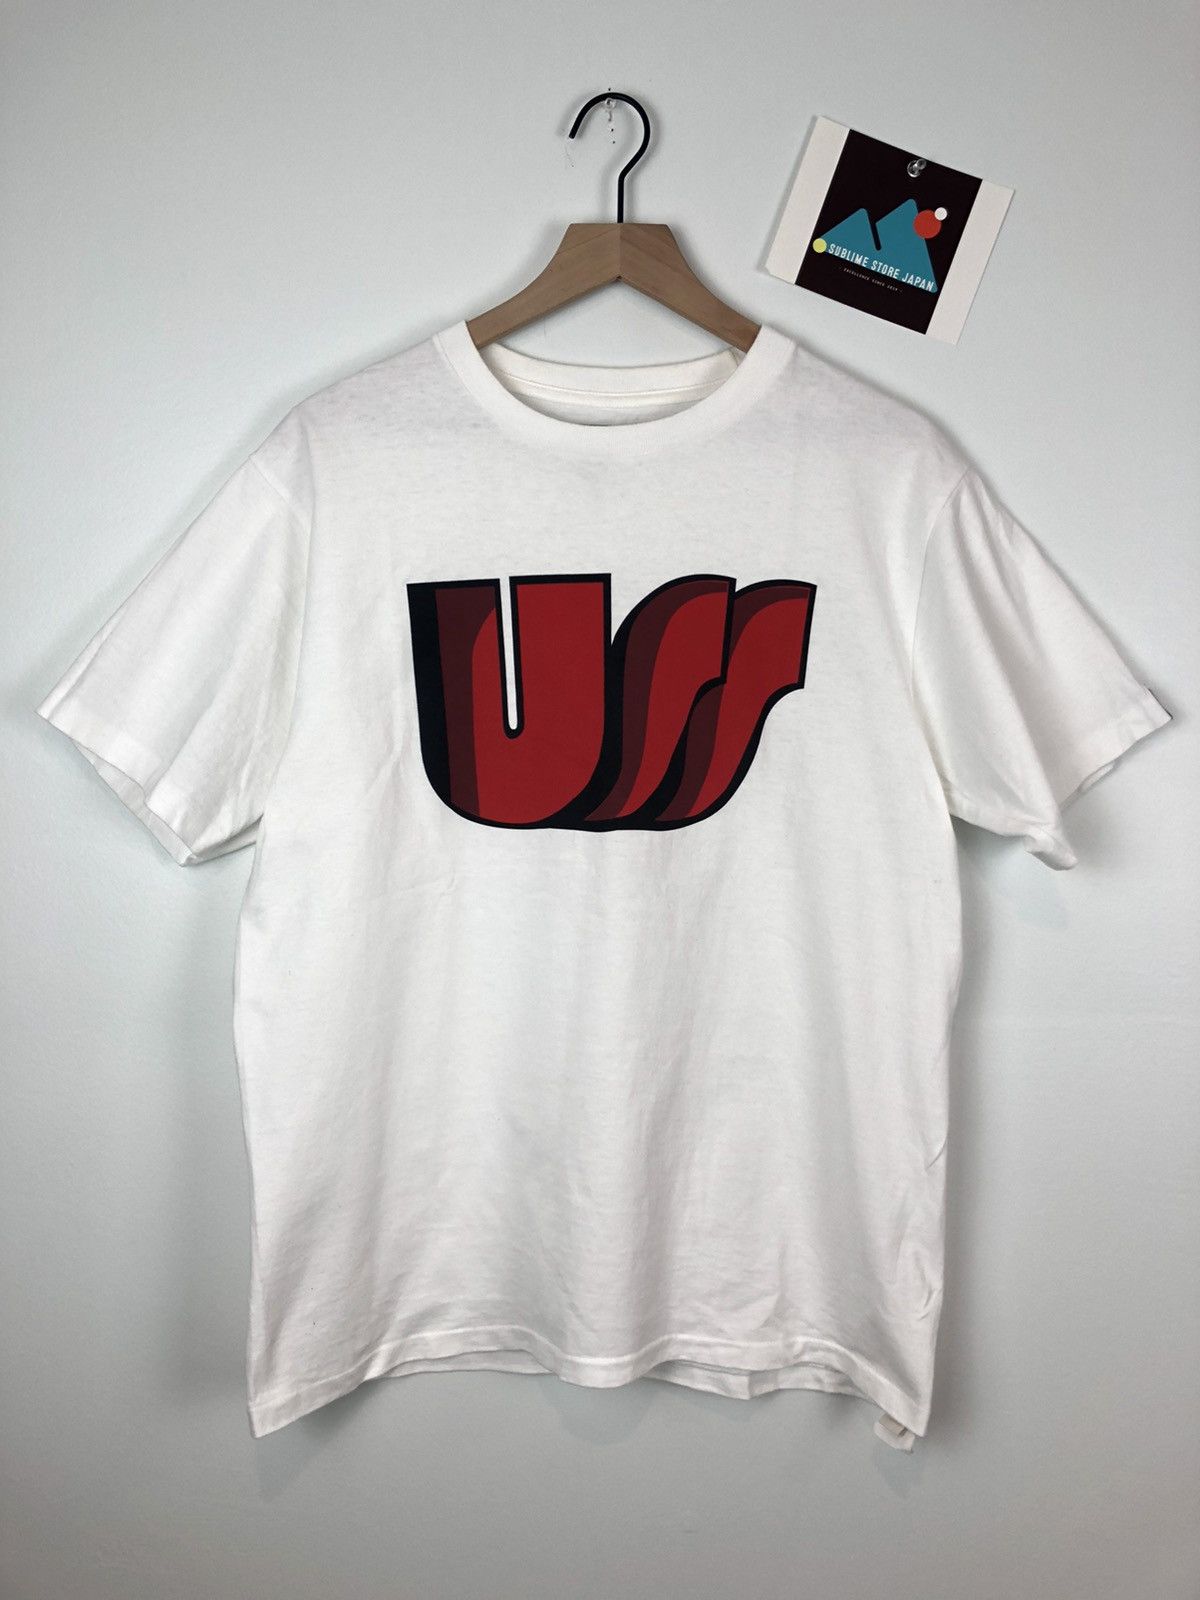 Bape 🔥FREE SHIPPING! Ursus Bape”USS” Logo Tee 100% Authentic | Grailed